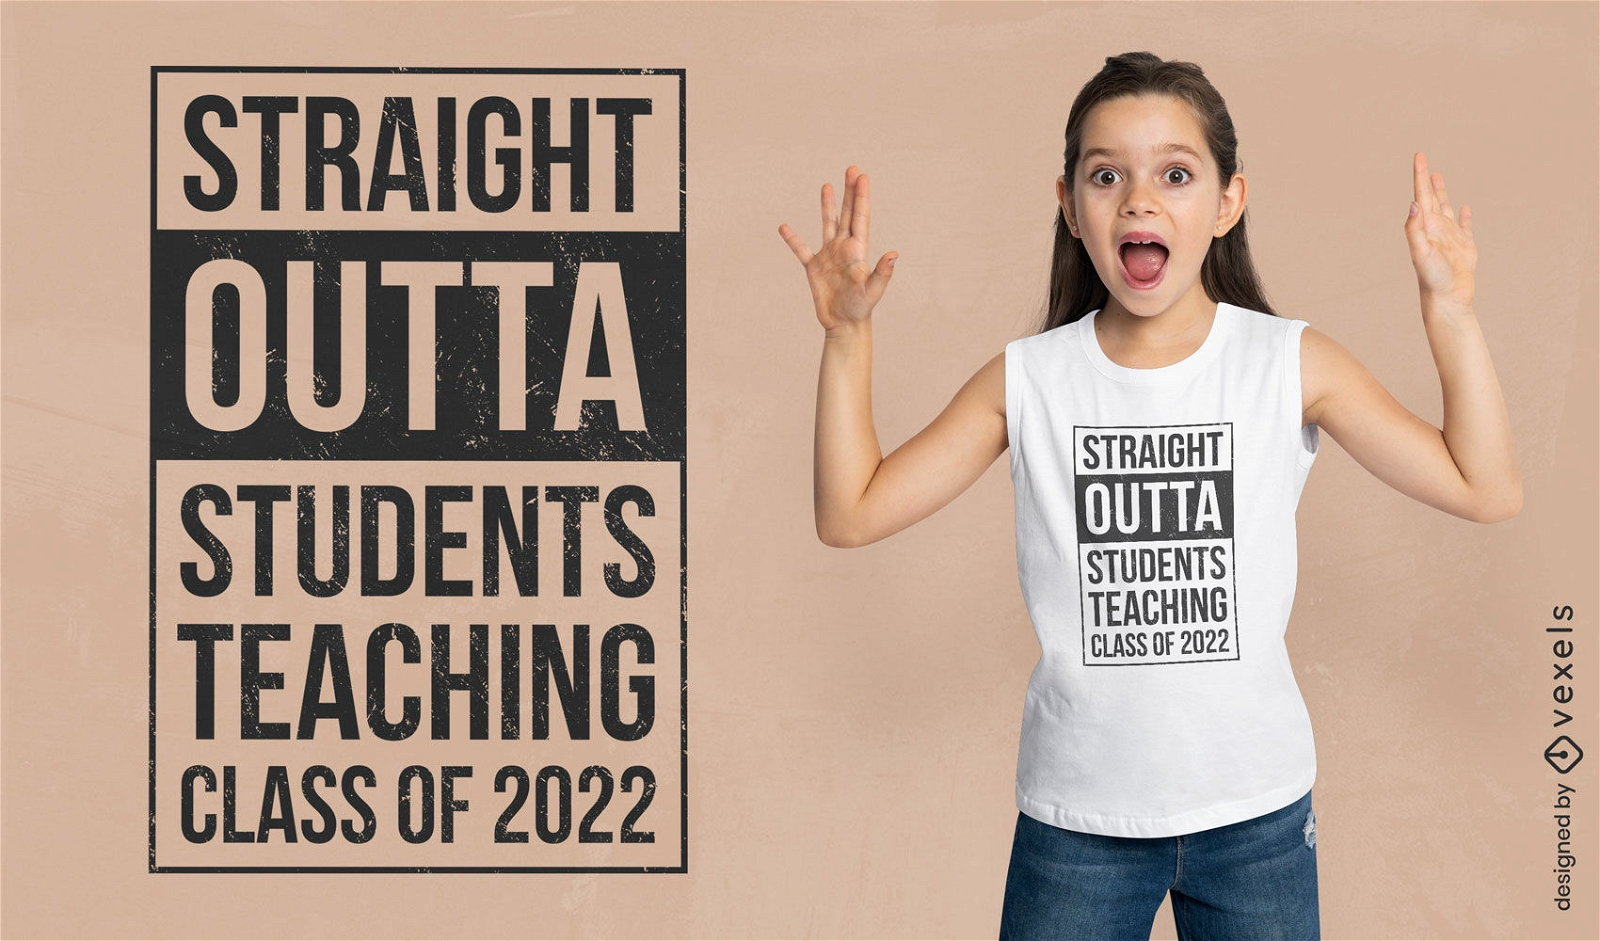 Straight outta teachers quote t-shirt design